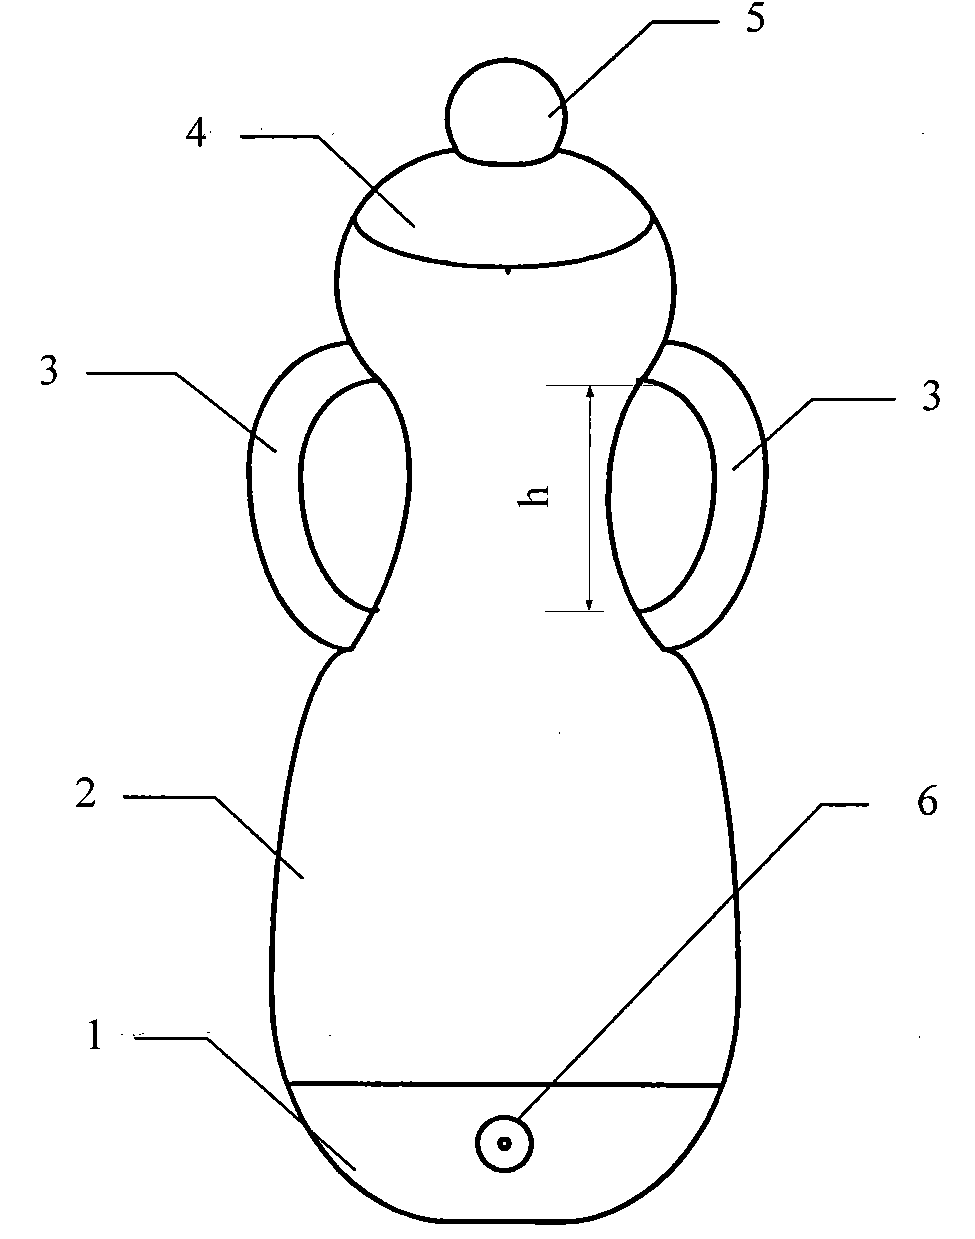 Heating milk bottle with handle and using method